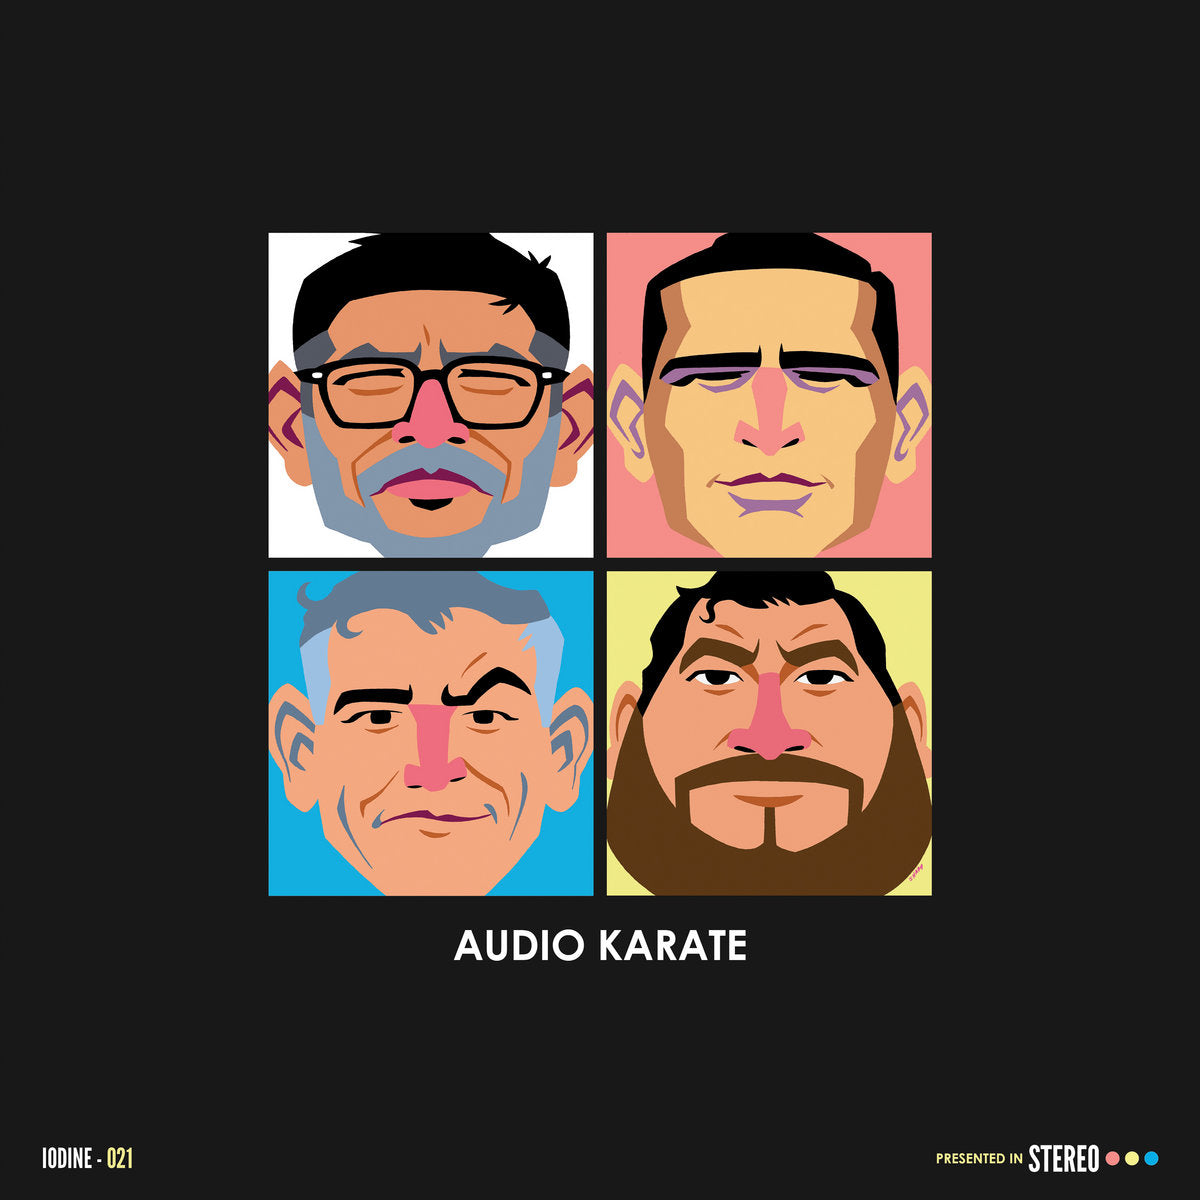 Audio Karate "Otra!" LP